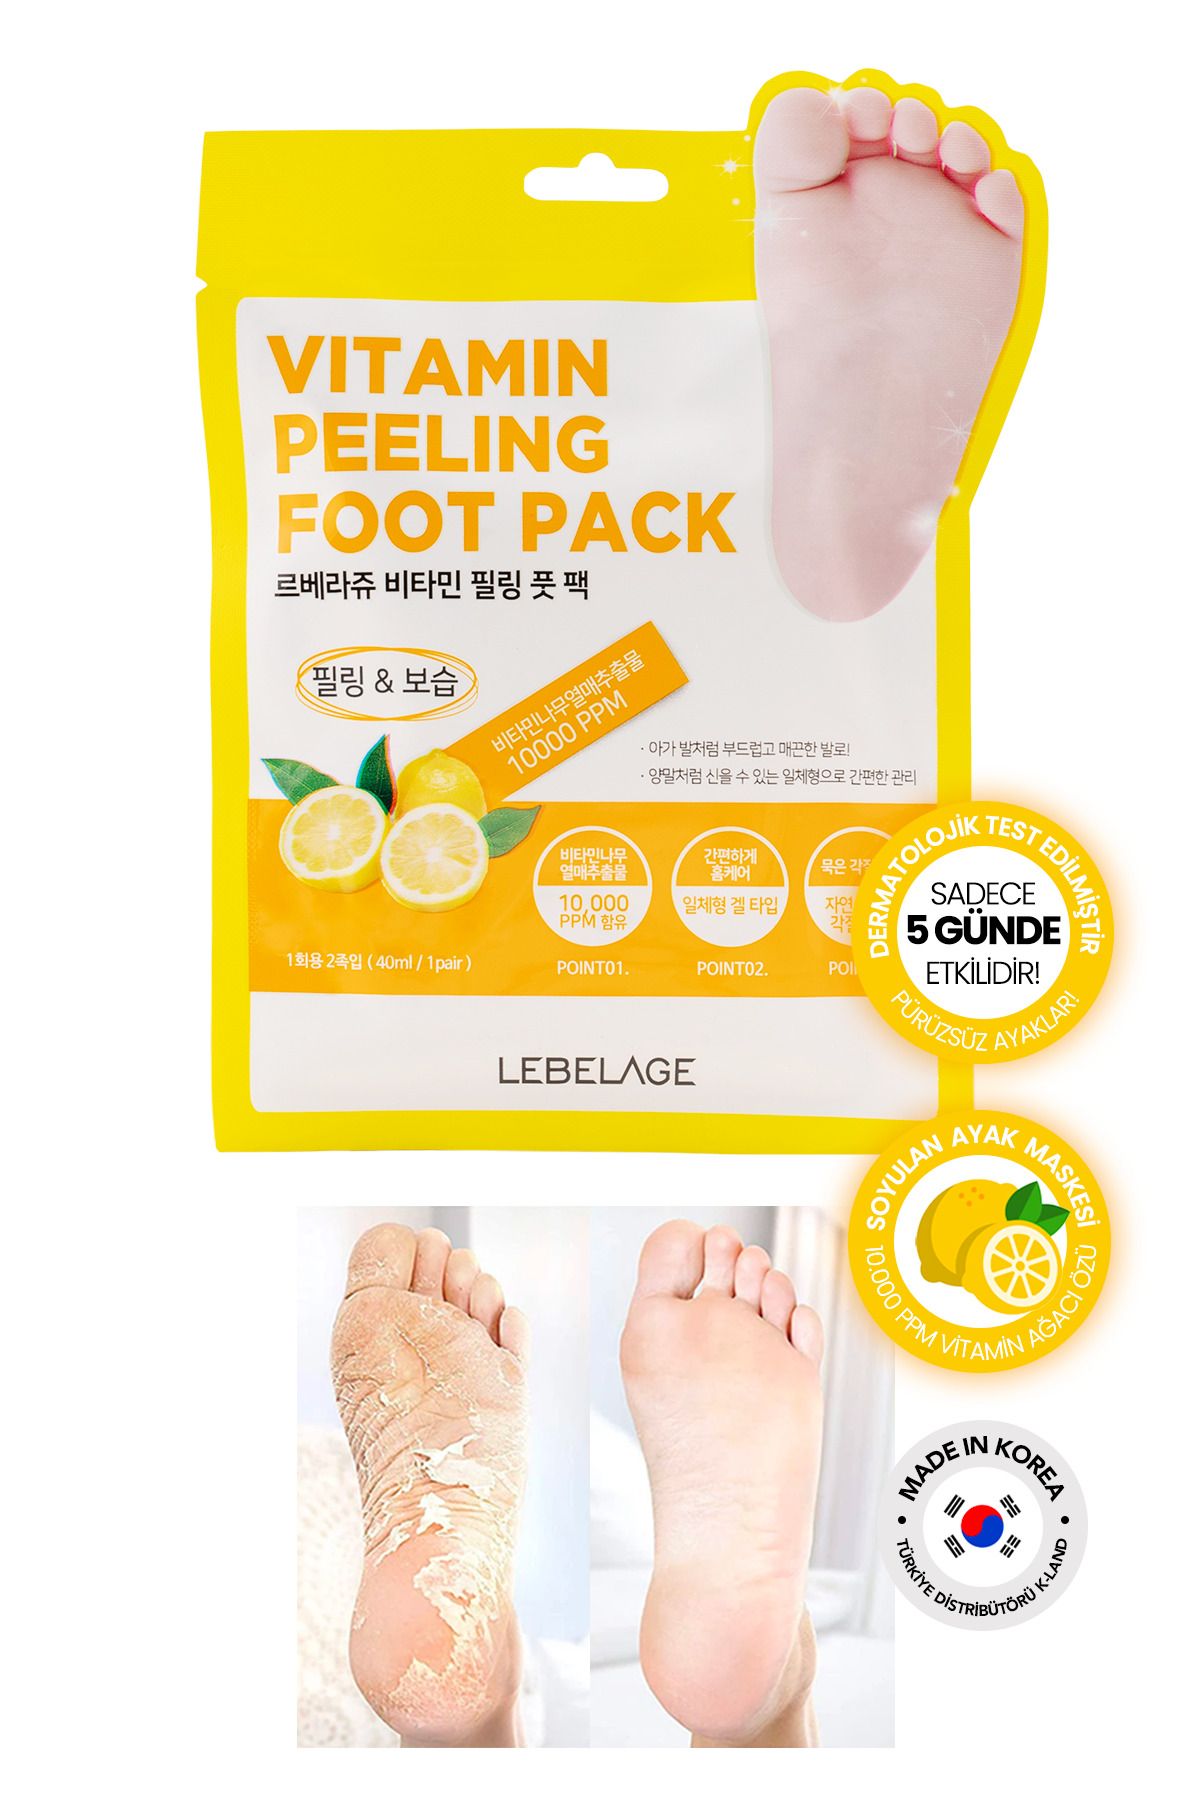 LEBELAGE Soyulan Ayak Maskesi Vitamin Kompleksi Kore Soyucu Maske Lebelage Vitamin Peeling Foot Pack